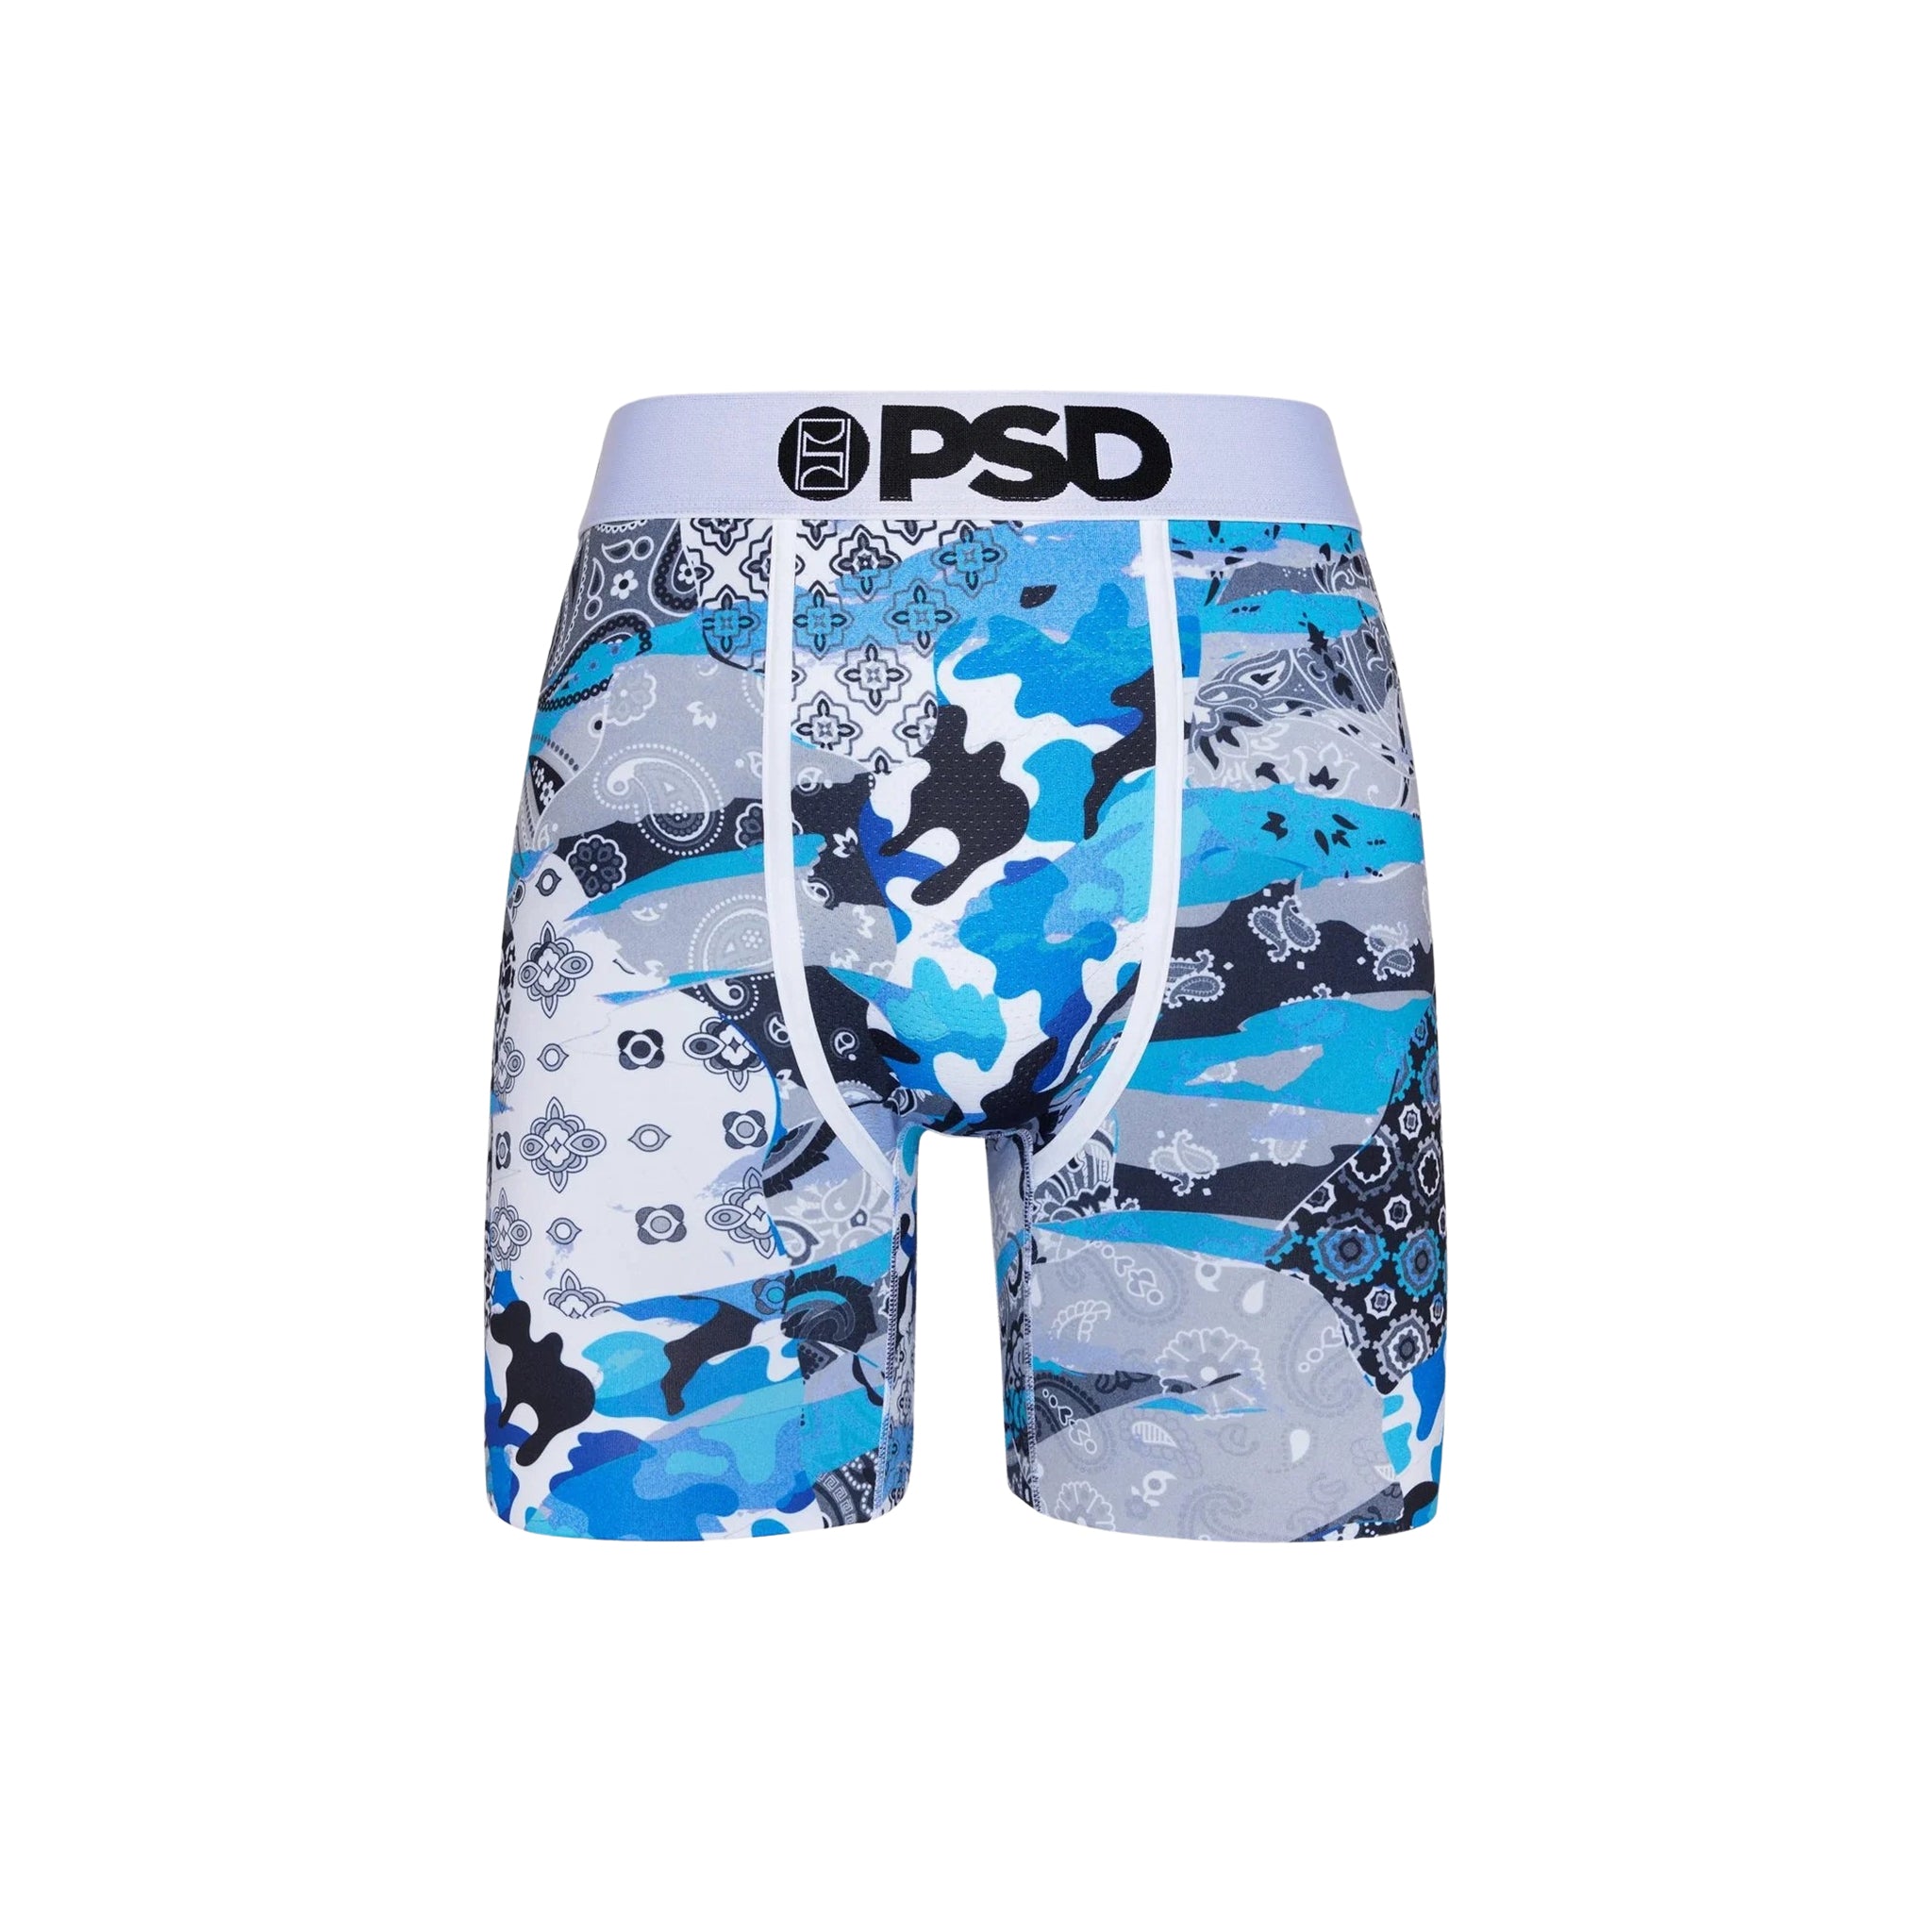 PSD "Paisley Tear" Underwear